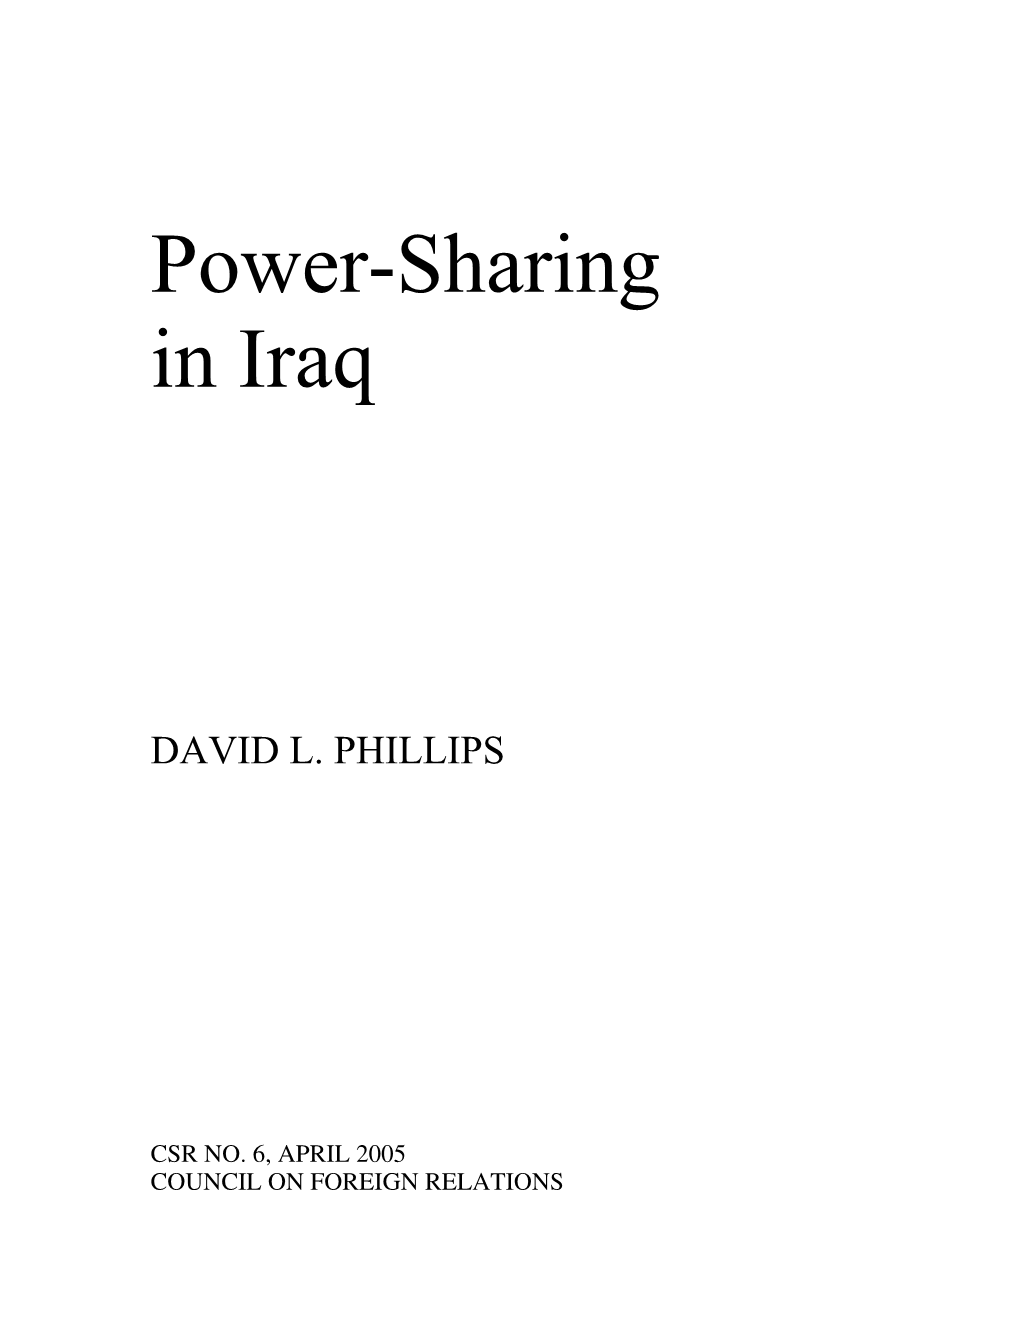 Power-Sharing in Iraq